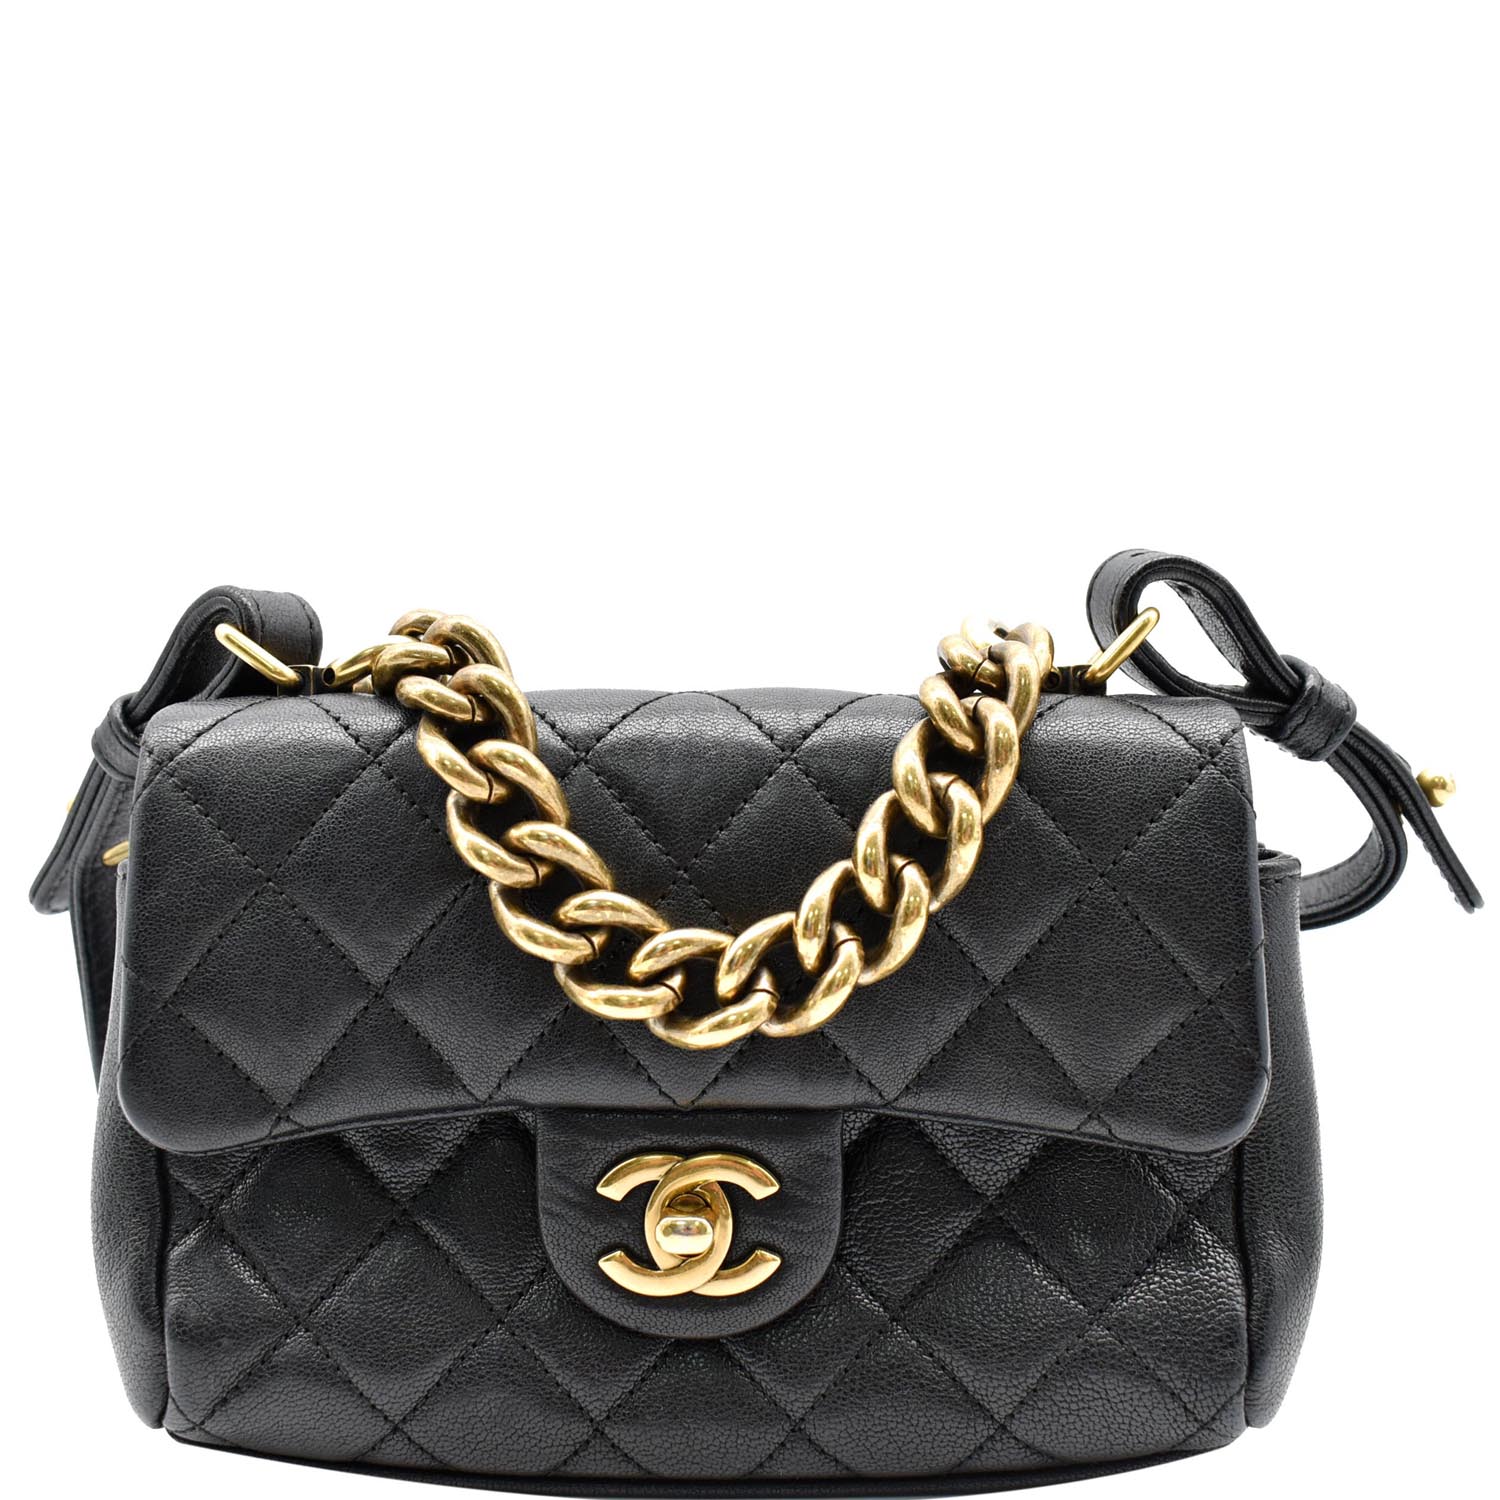 Chanel Large Matelasse Trapezio Flap Bag in Navy